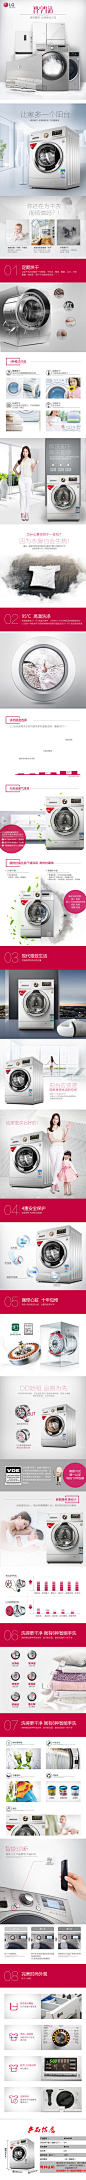 LG WD-A12411D 8公斤滚筒洗衣机全自动DD变频智能 洗烘一体 天猫家电数码宝贝描述产品详情页设计